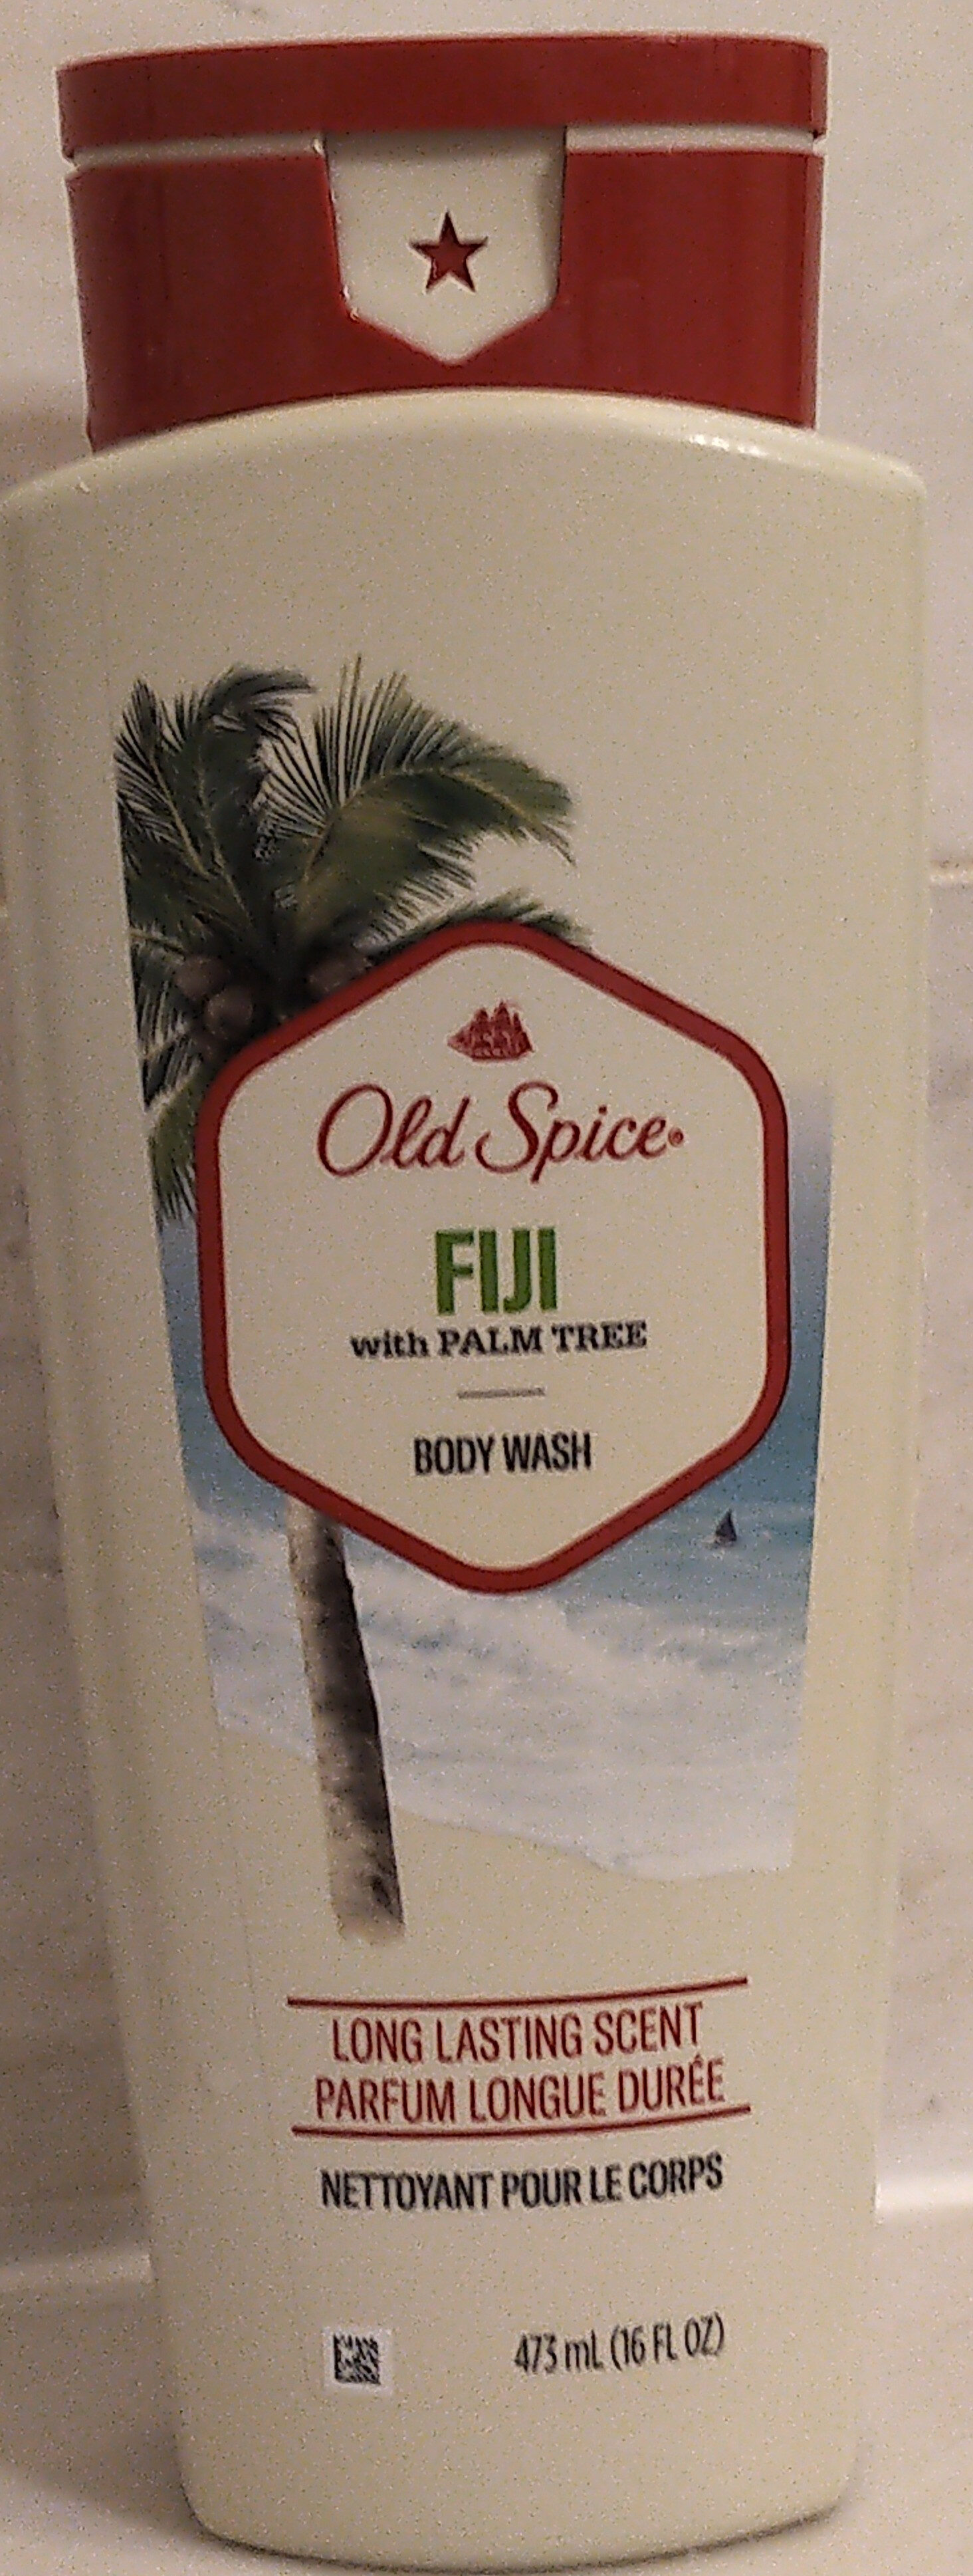 Fiji Body Wash with Palm Tree - Product - en